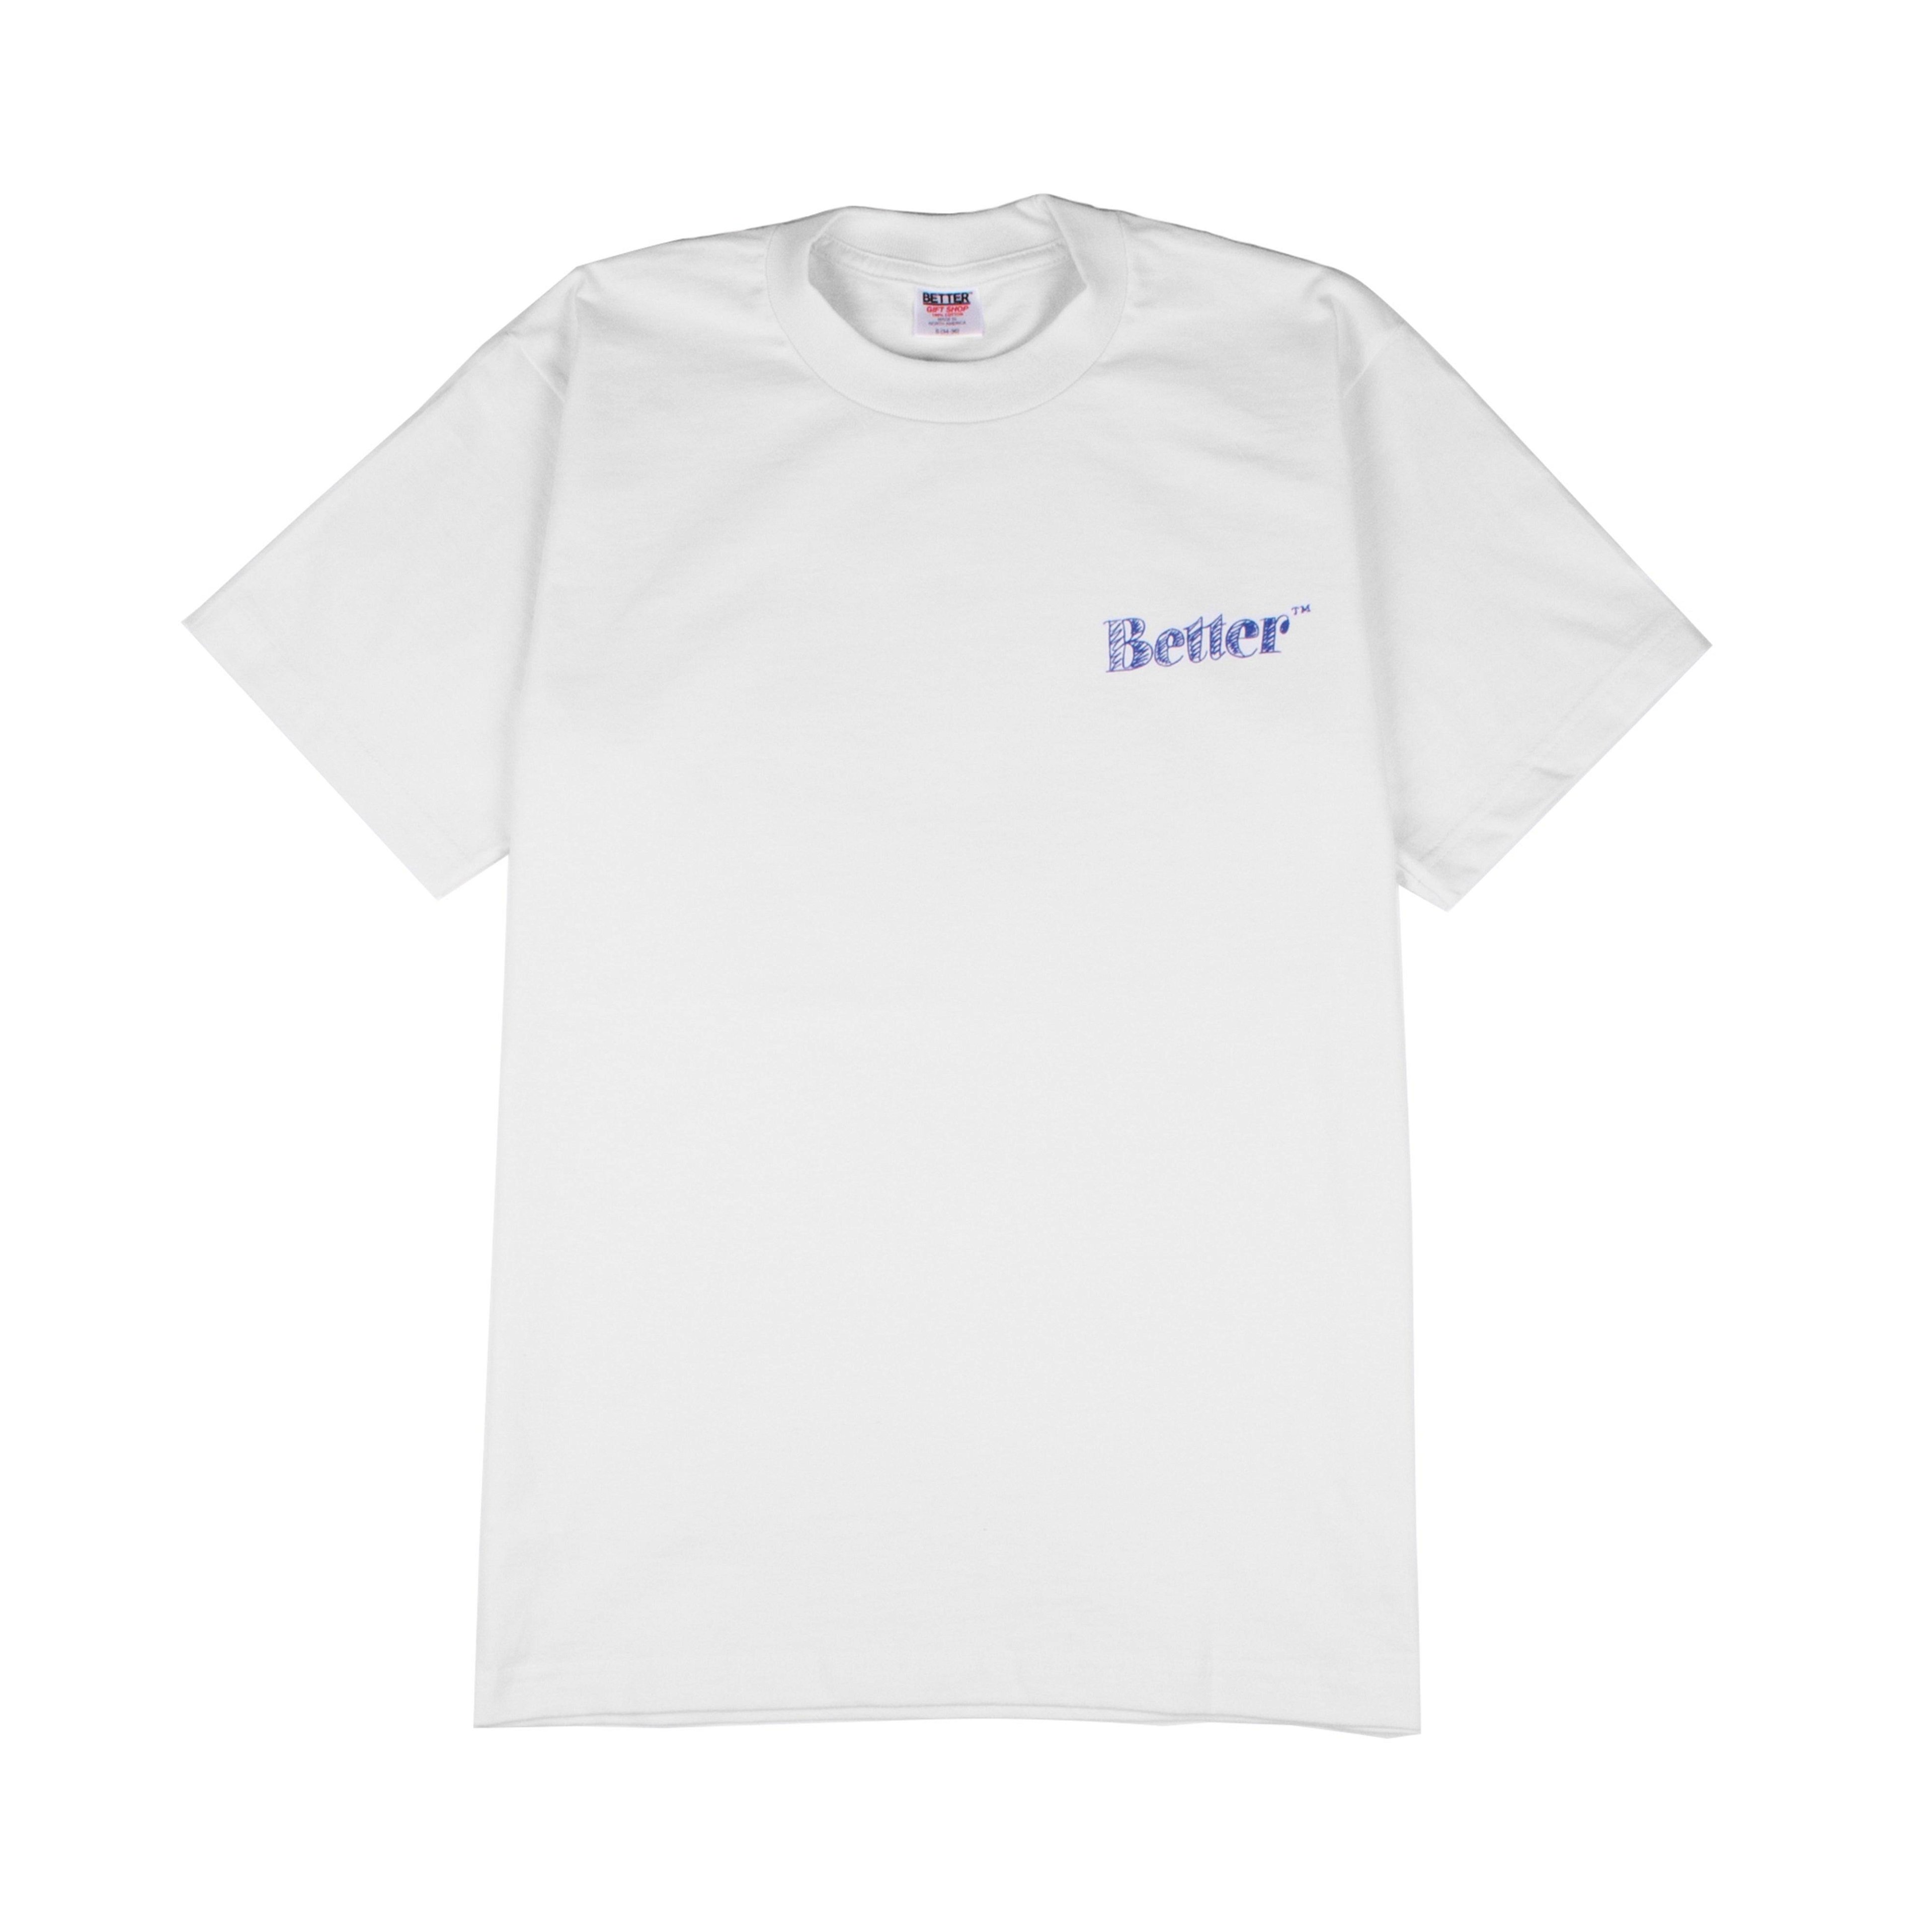 Better™ Gift Shop - Scribble Logo S/S T-Shirt - (White) by BETTER GIFT SHOP